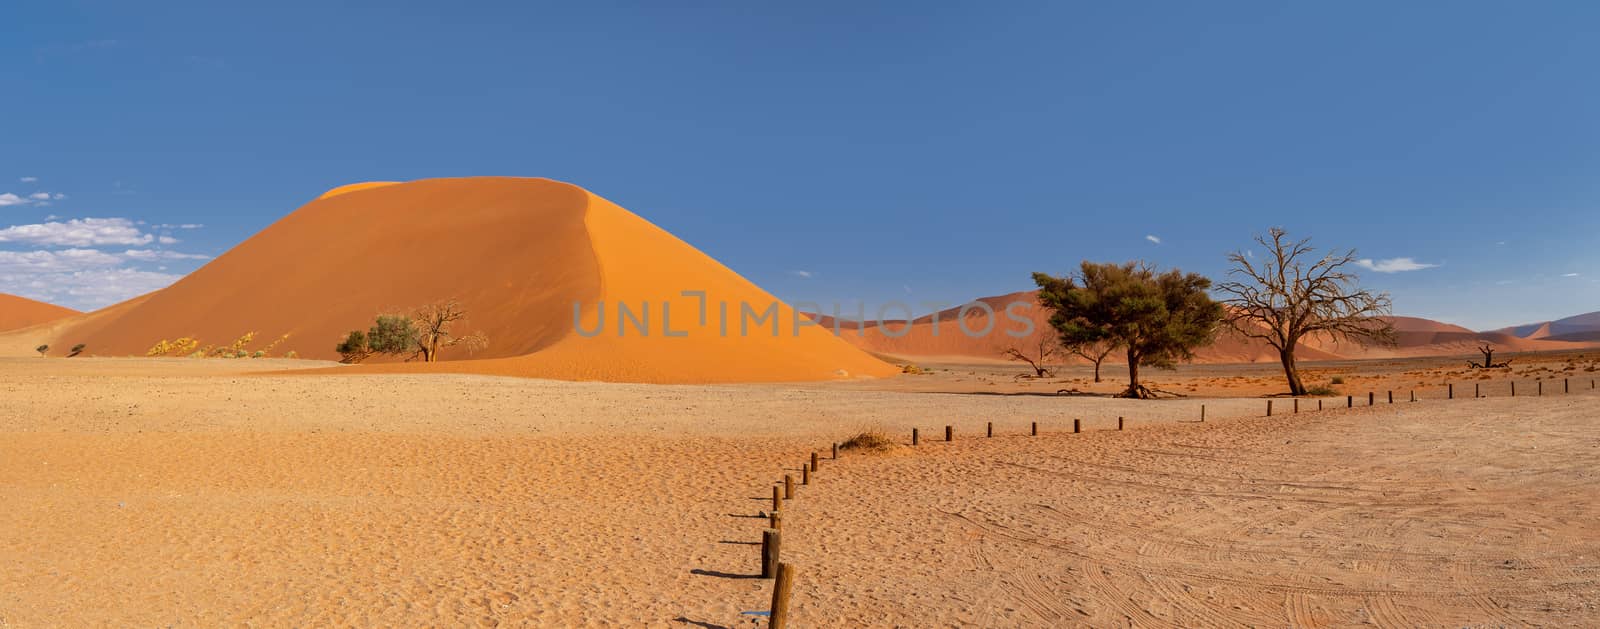 Dune 45 in Sossusvlei, Namibia desert with dead acacia tree. Namibia wilderness